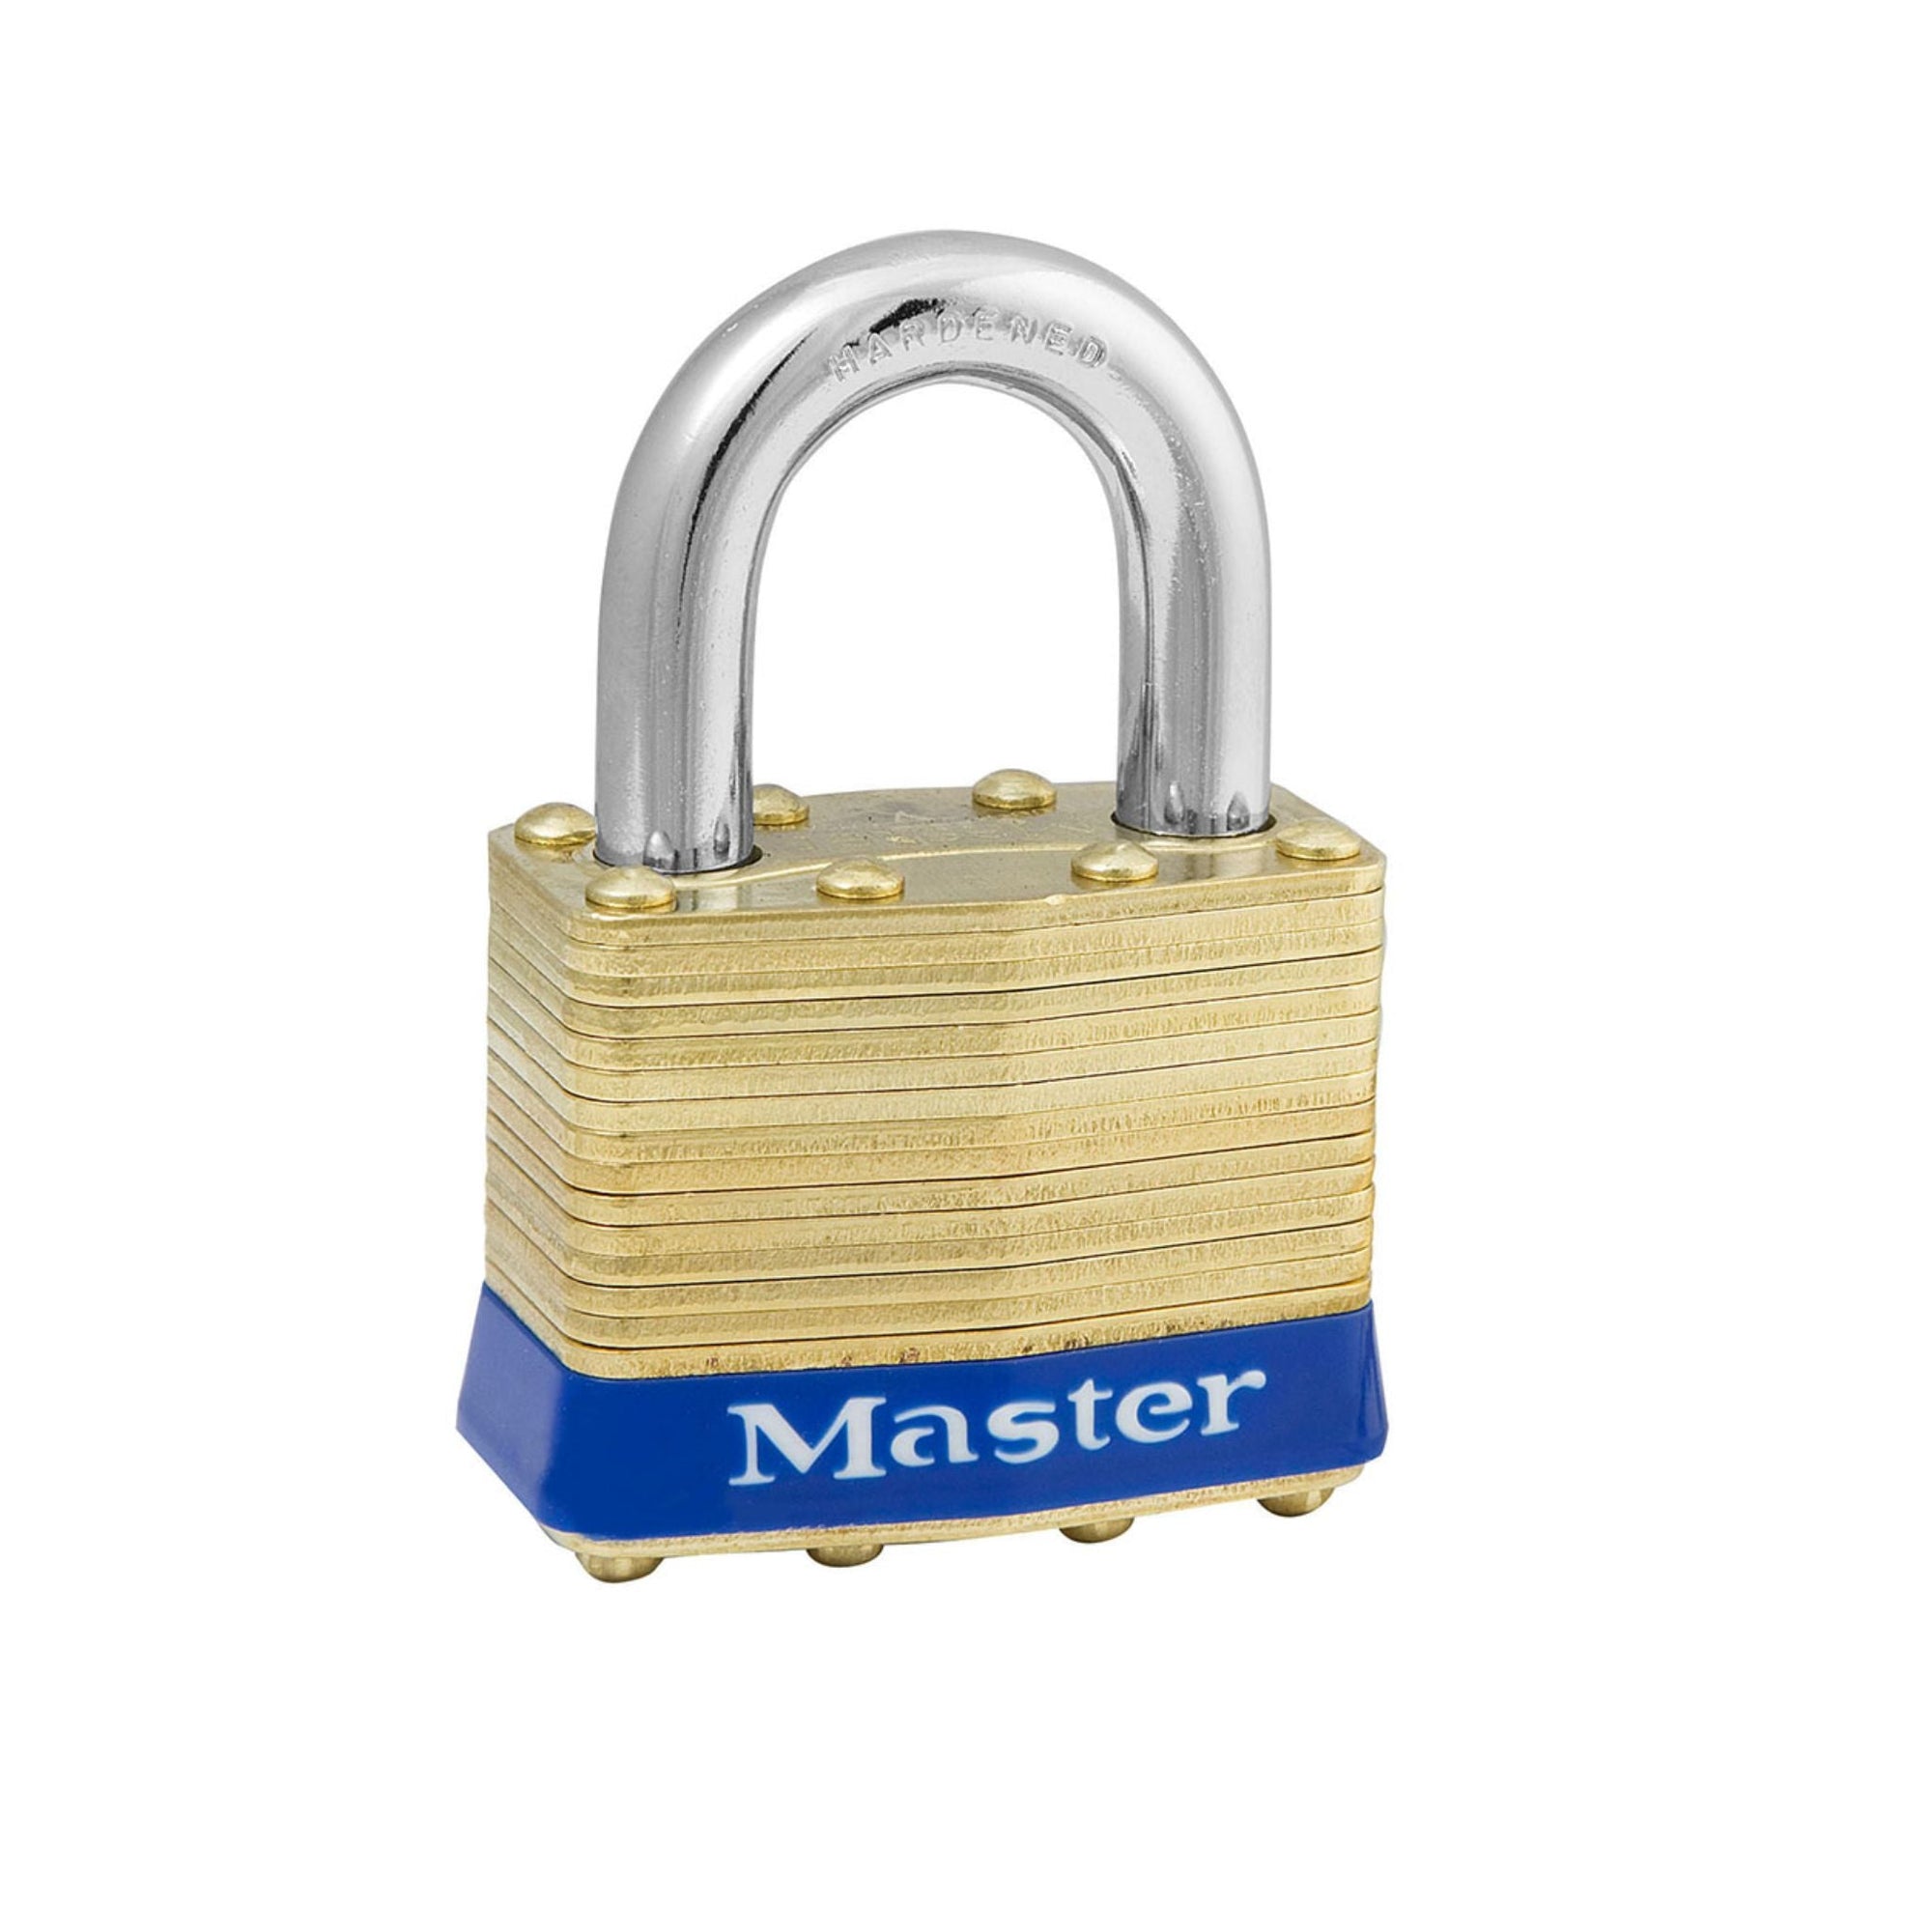 Master Lock 2KA 0307 Lock Laminated brass No. 2 Series Padlock Keyed to Match Existing Key Number KA0307 - The Lock Source